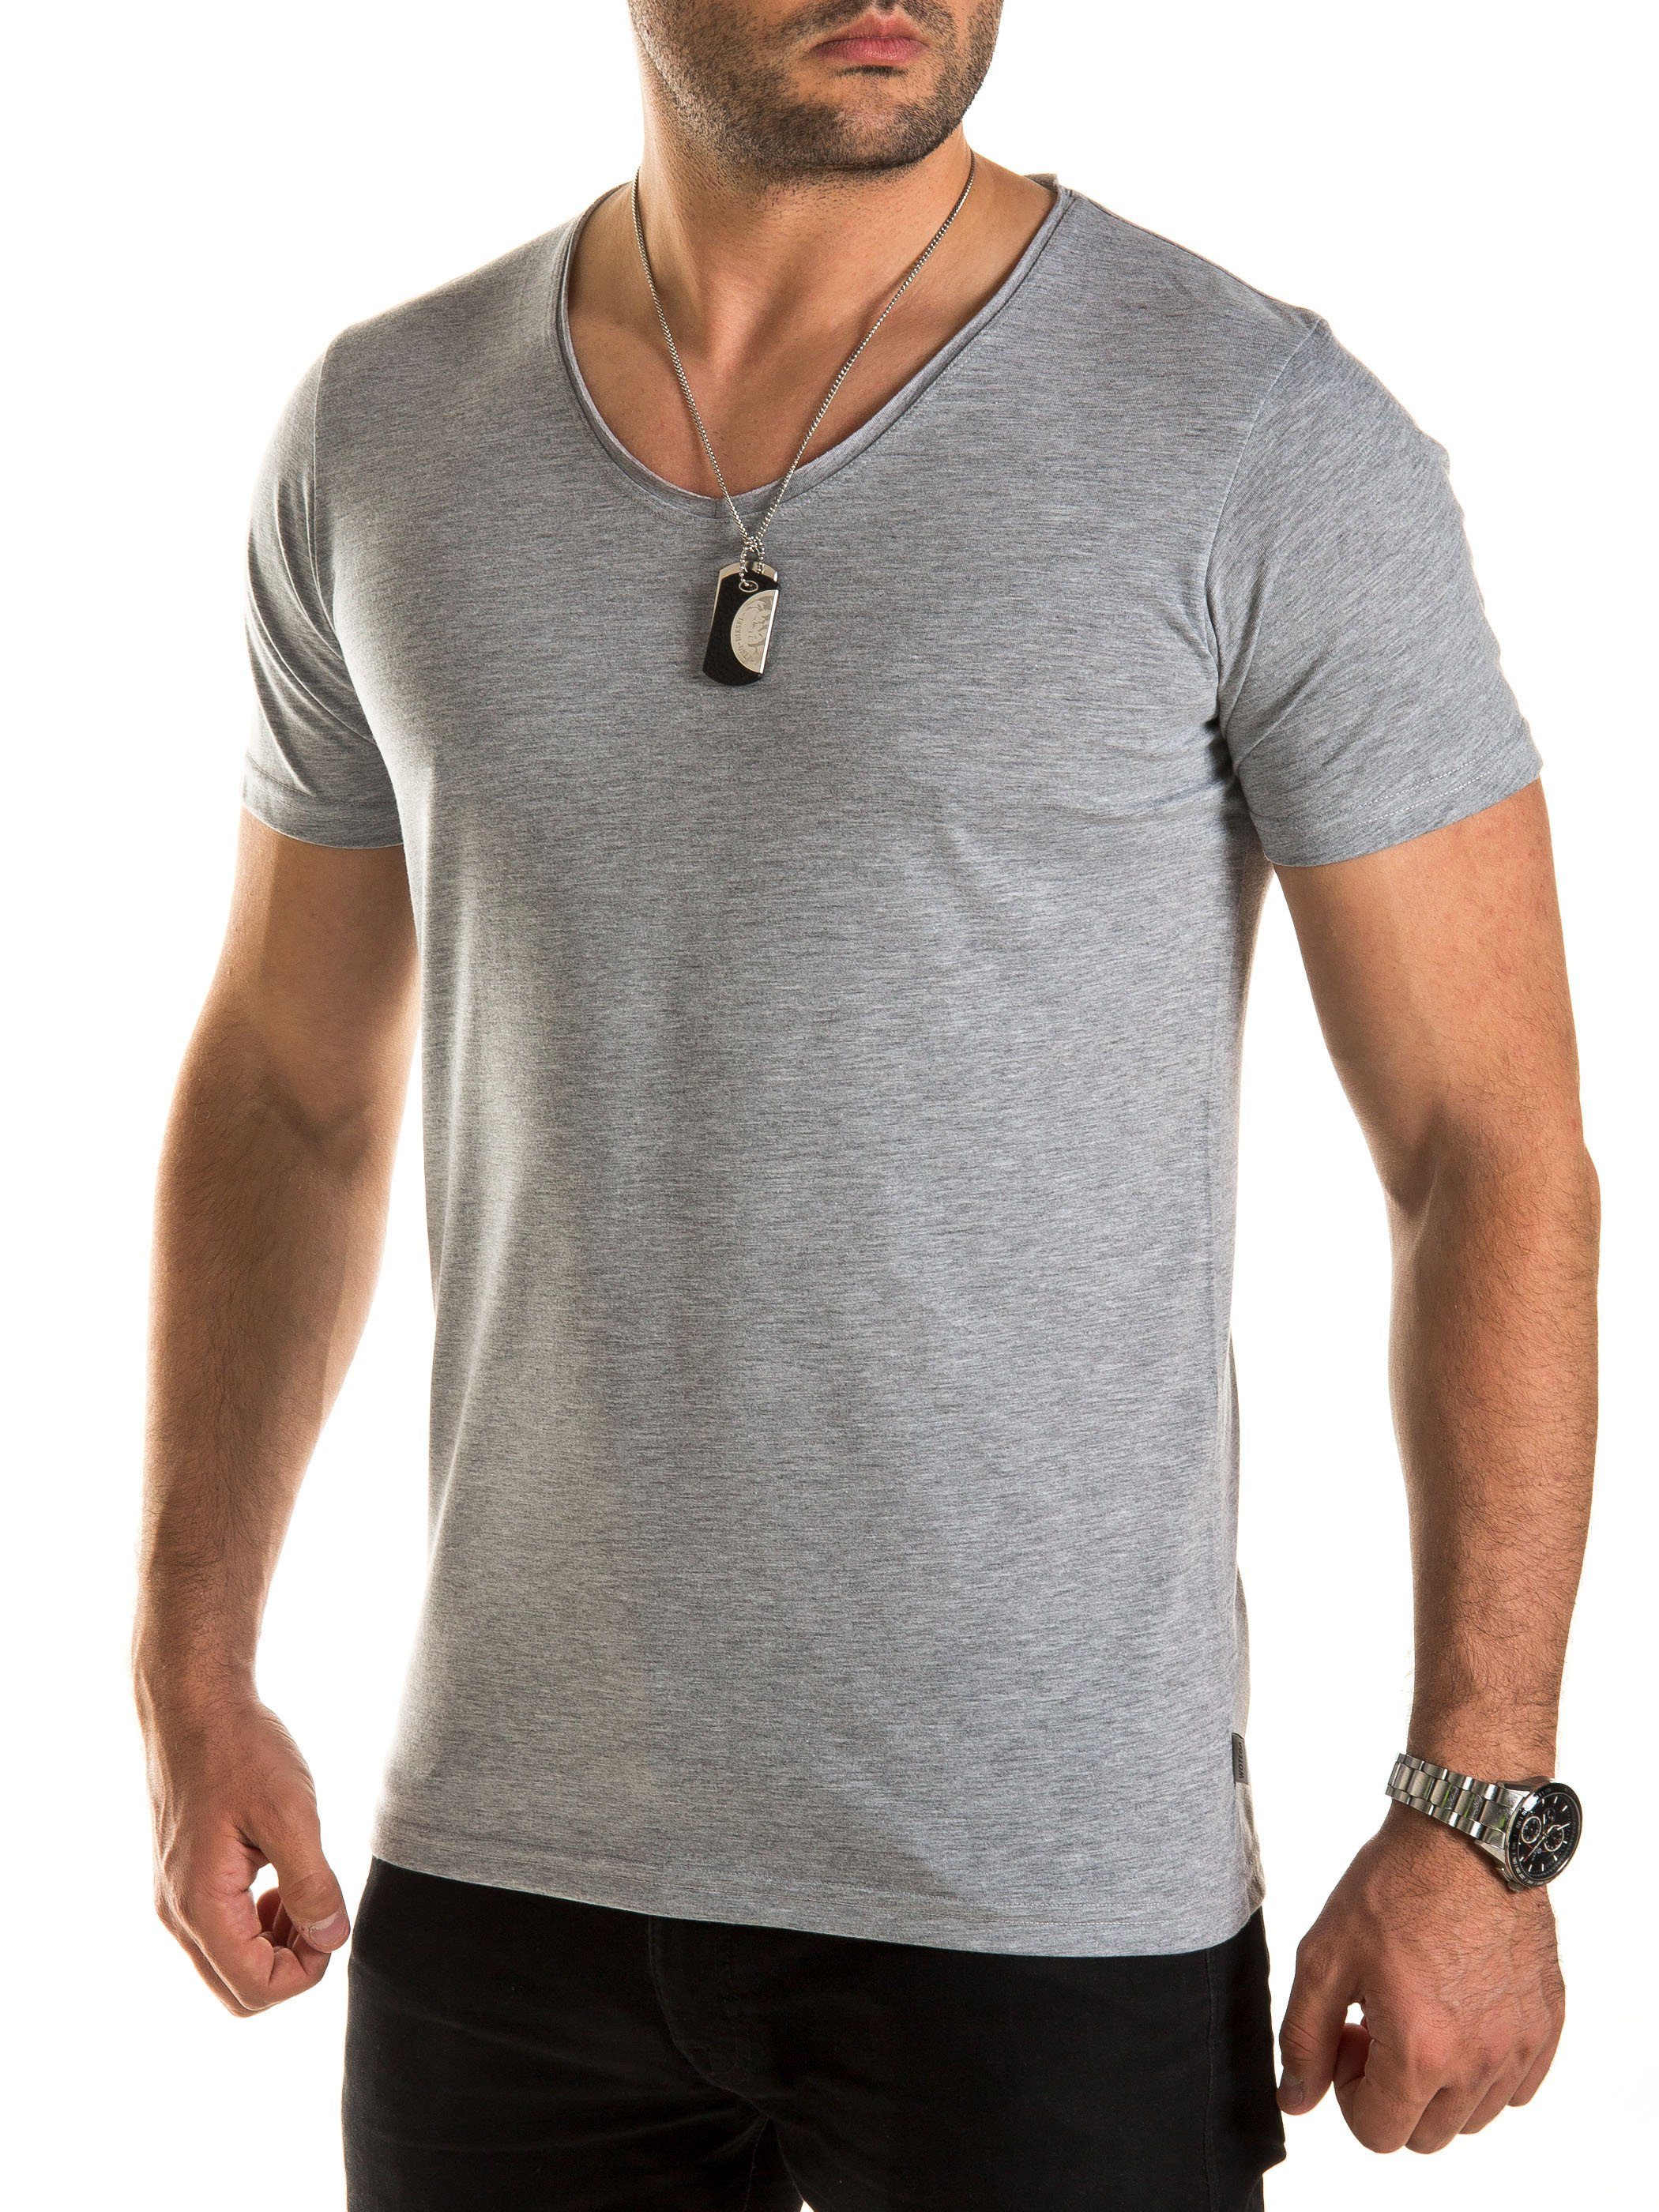 WOTEGA V-Shirt Nasus Basic Tee V-Neck Grau (dapple gray 163907) | V-Shirts